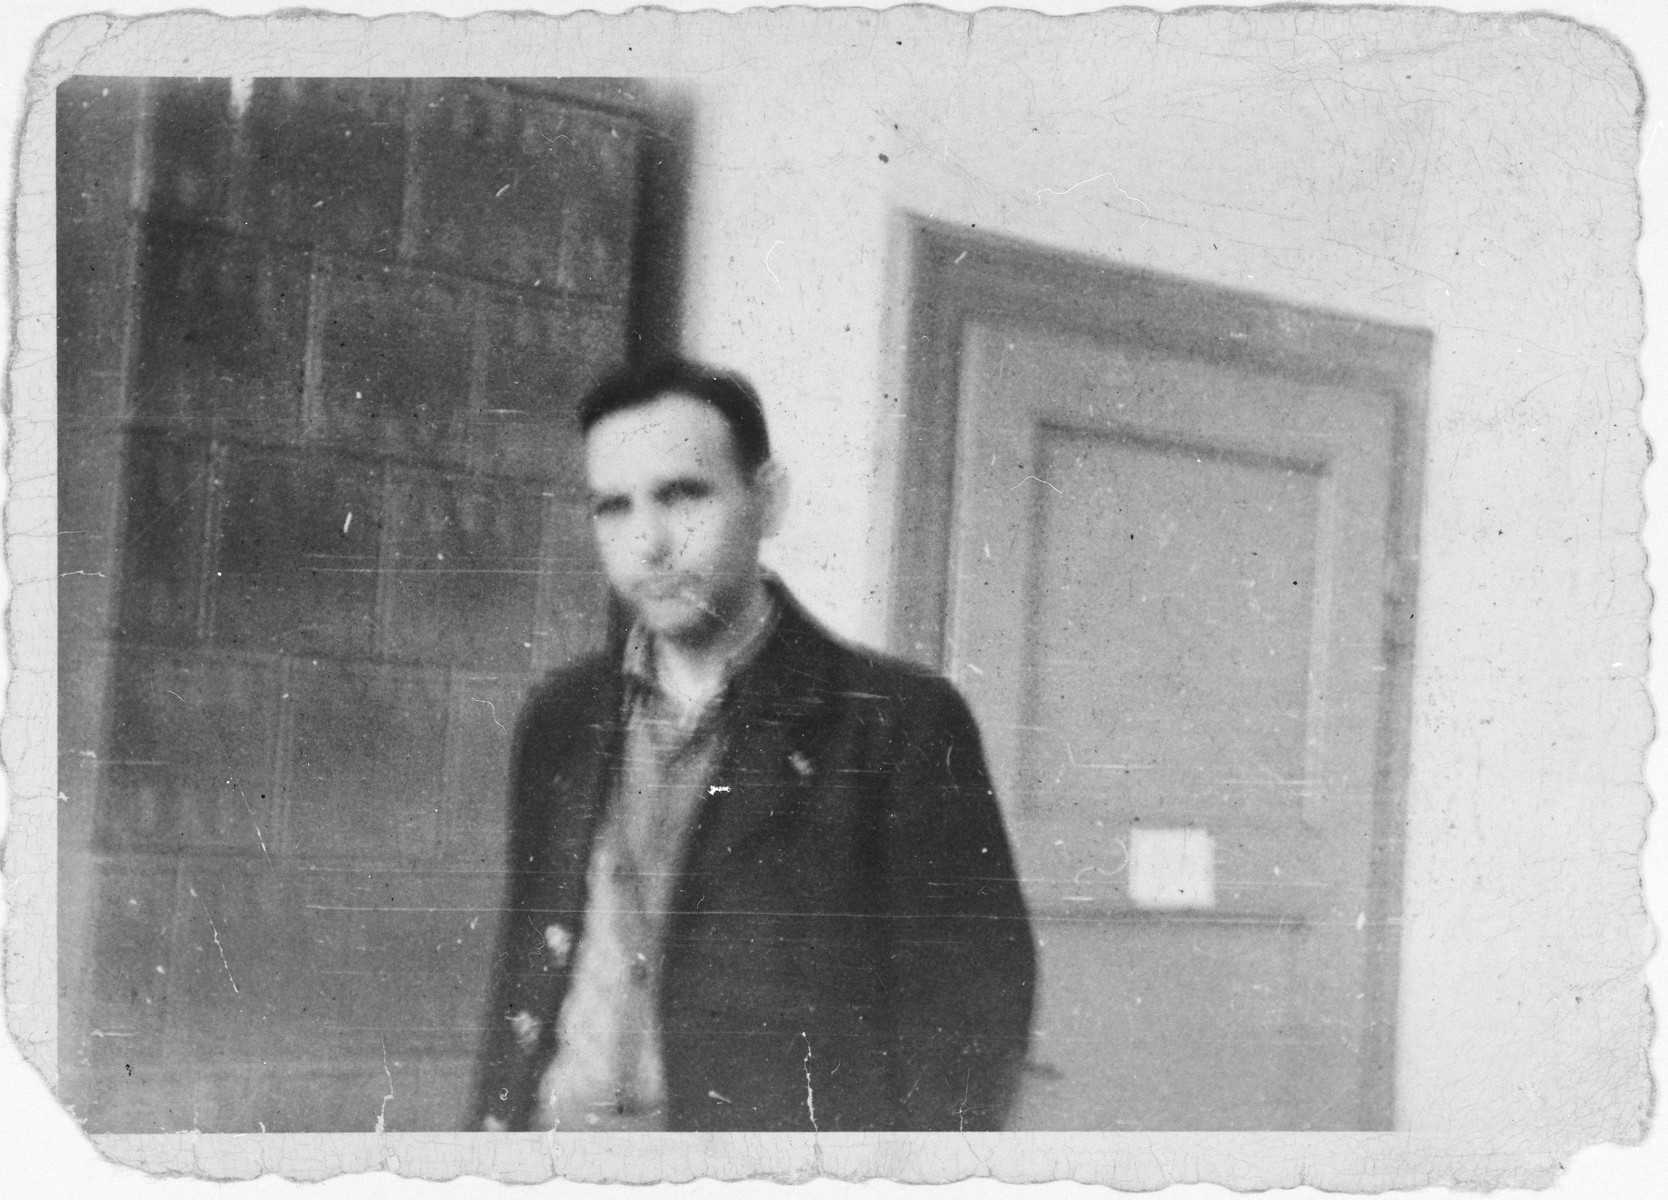 Portrait of Amon Goeth while in Polish custody as an accused war criminal.